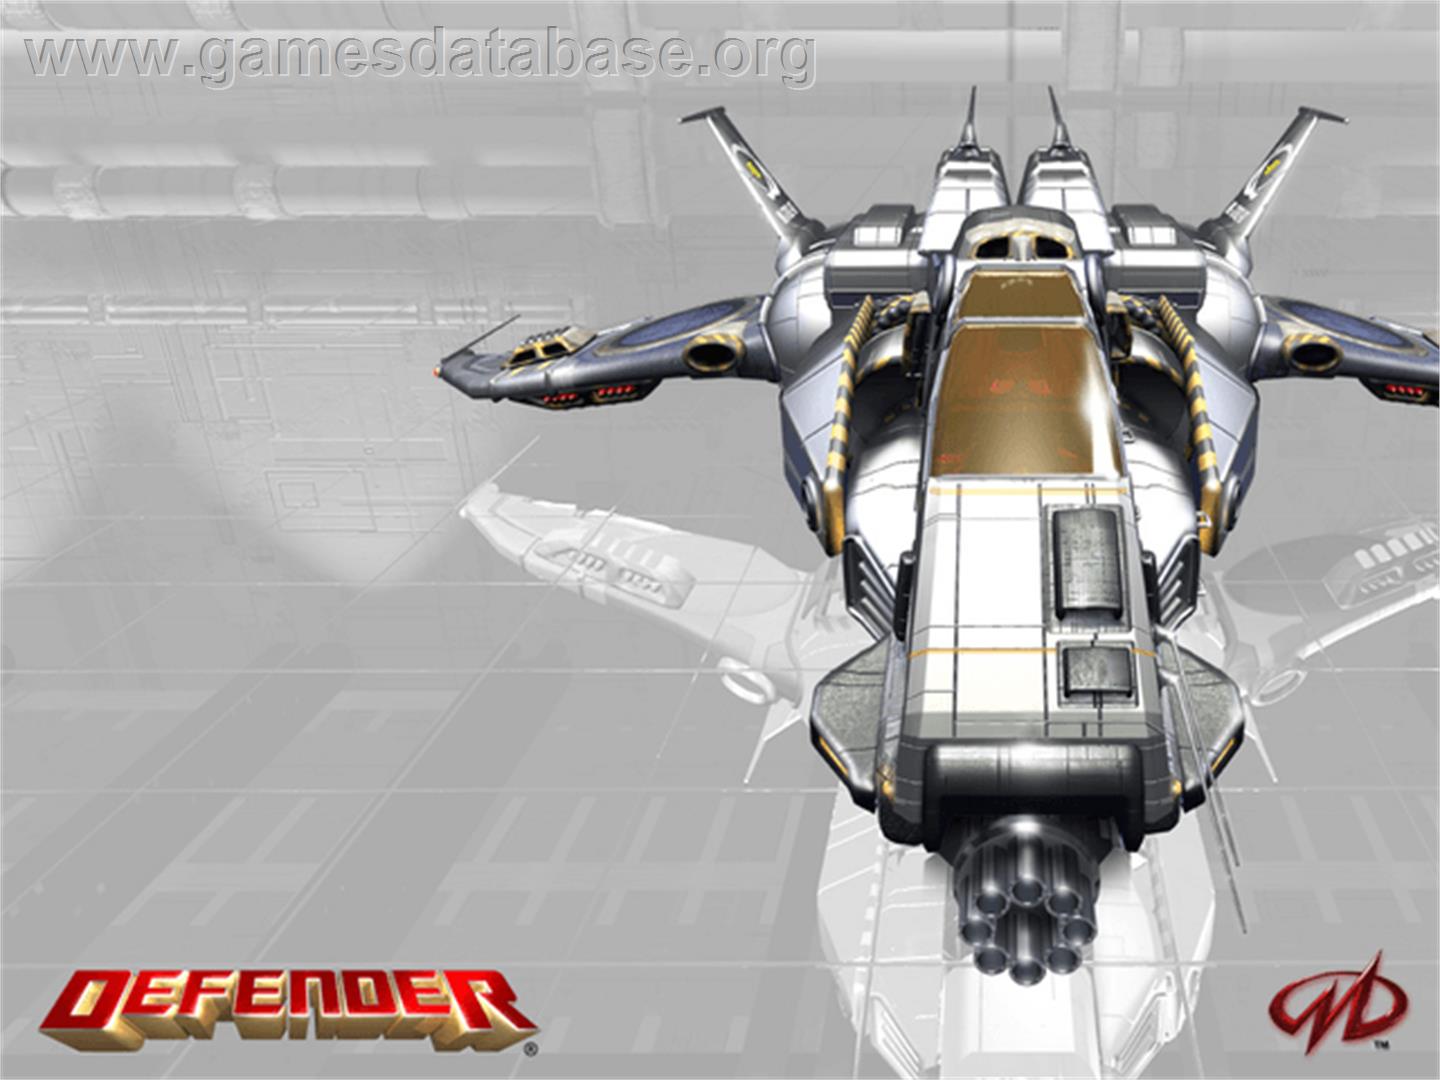 Defender - Microsoft Xbox - Artwork - Title Screen